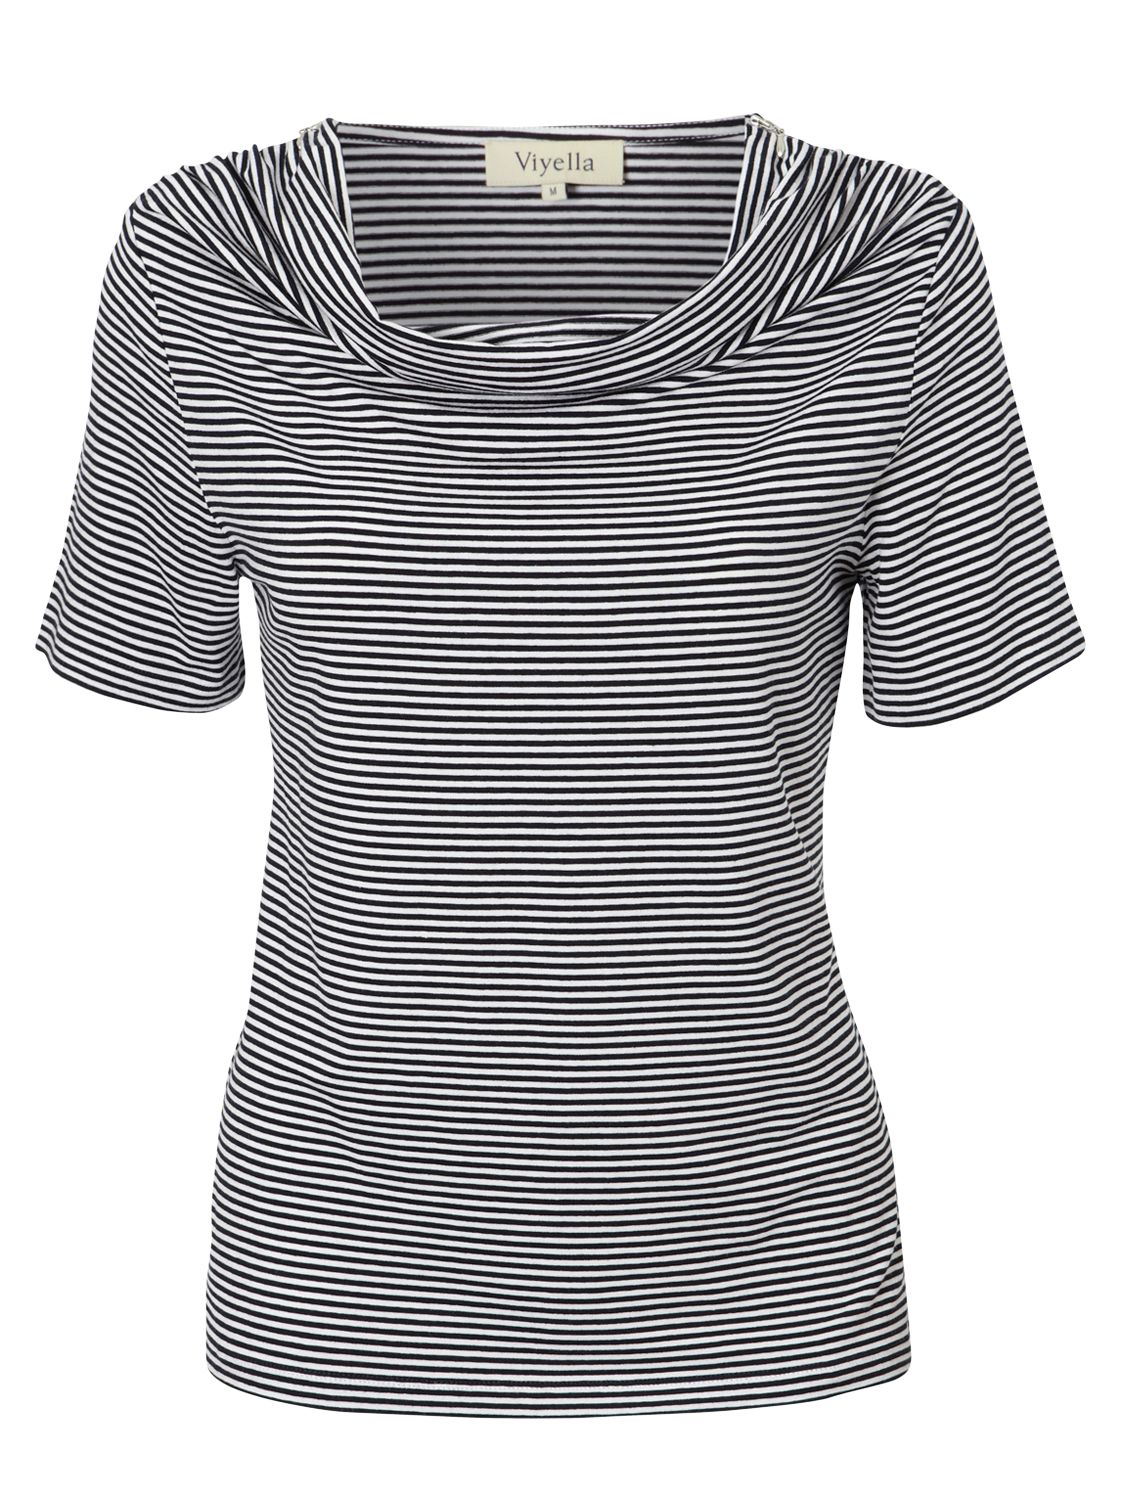 Viyella Zip Shoulder Stripe T-Shirt, Navy